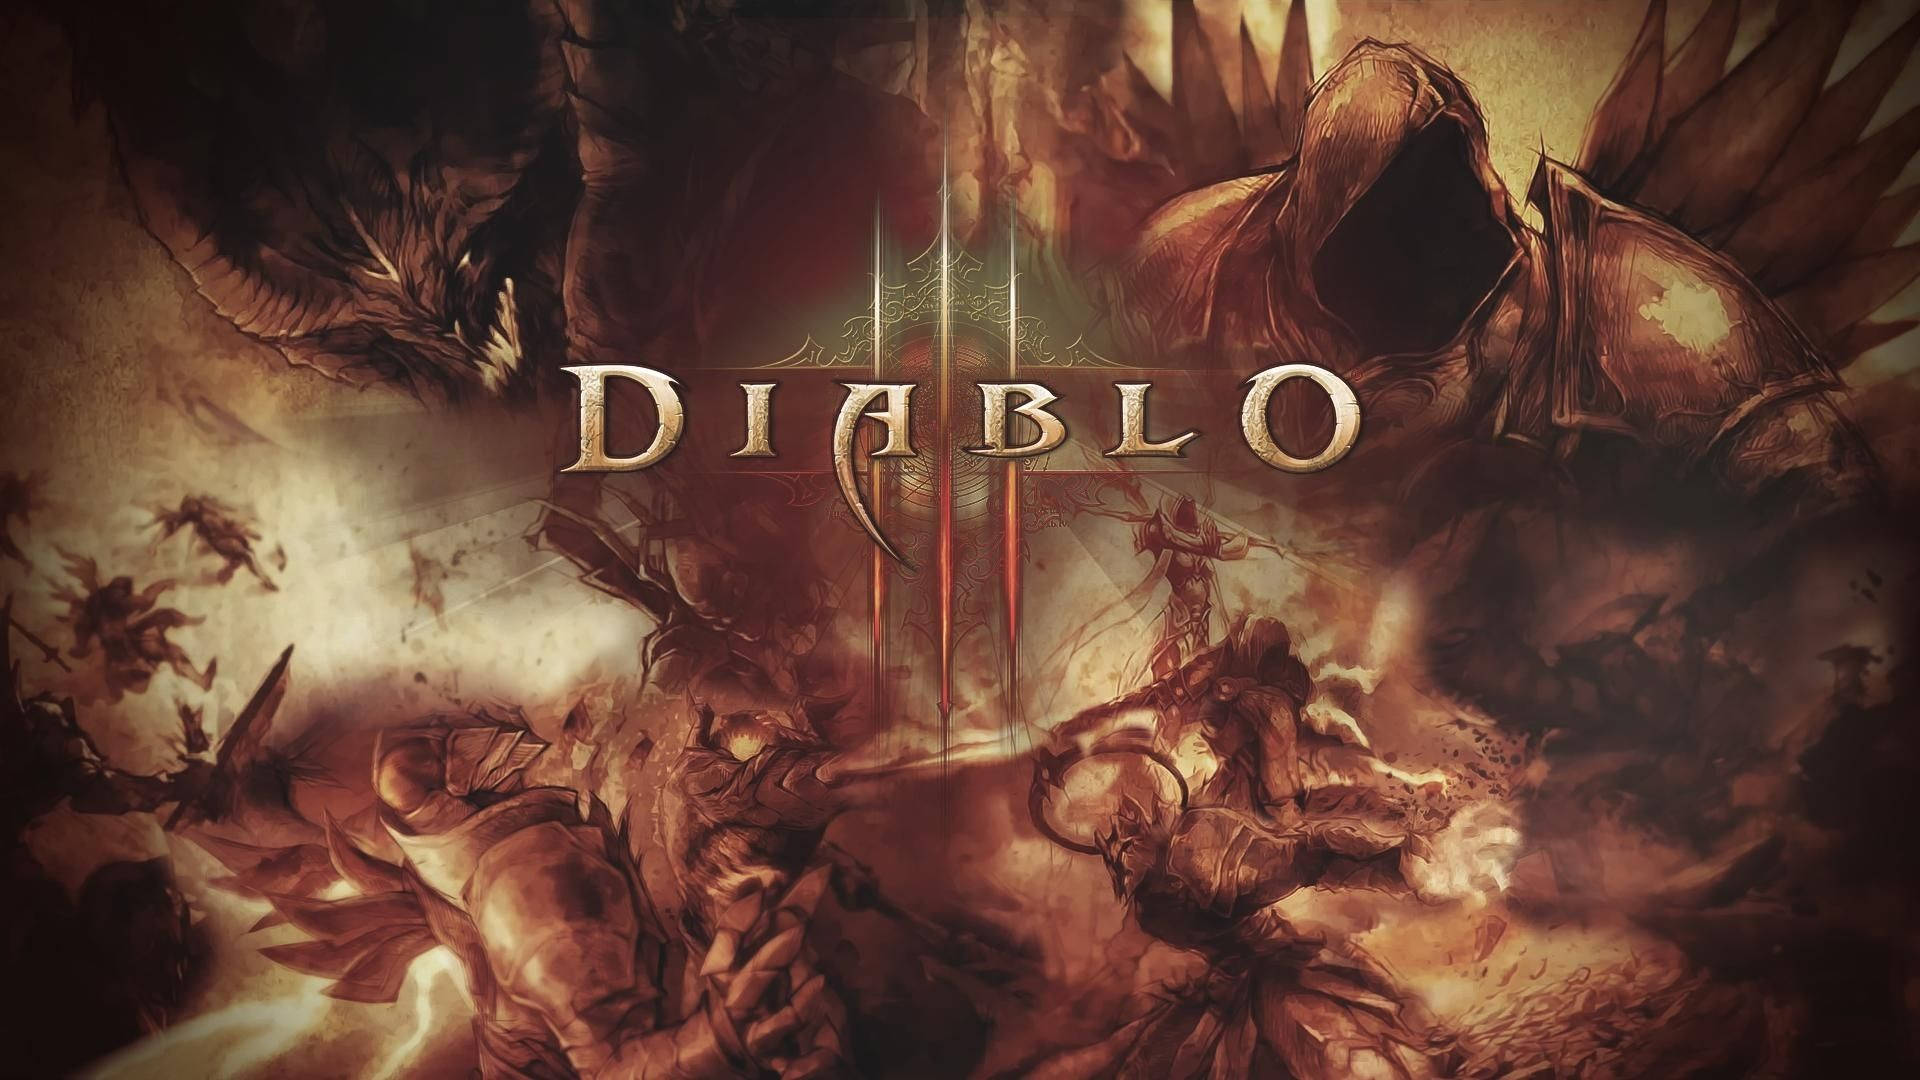  Diablo 3 1920x1080 Hintergrundbild 1920x1080. Free Diablo 3 Wallpaper Downloads, Diablo 3 Wallpaper for FREE